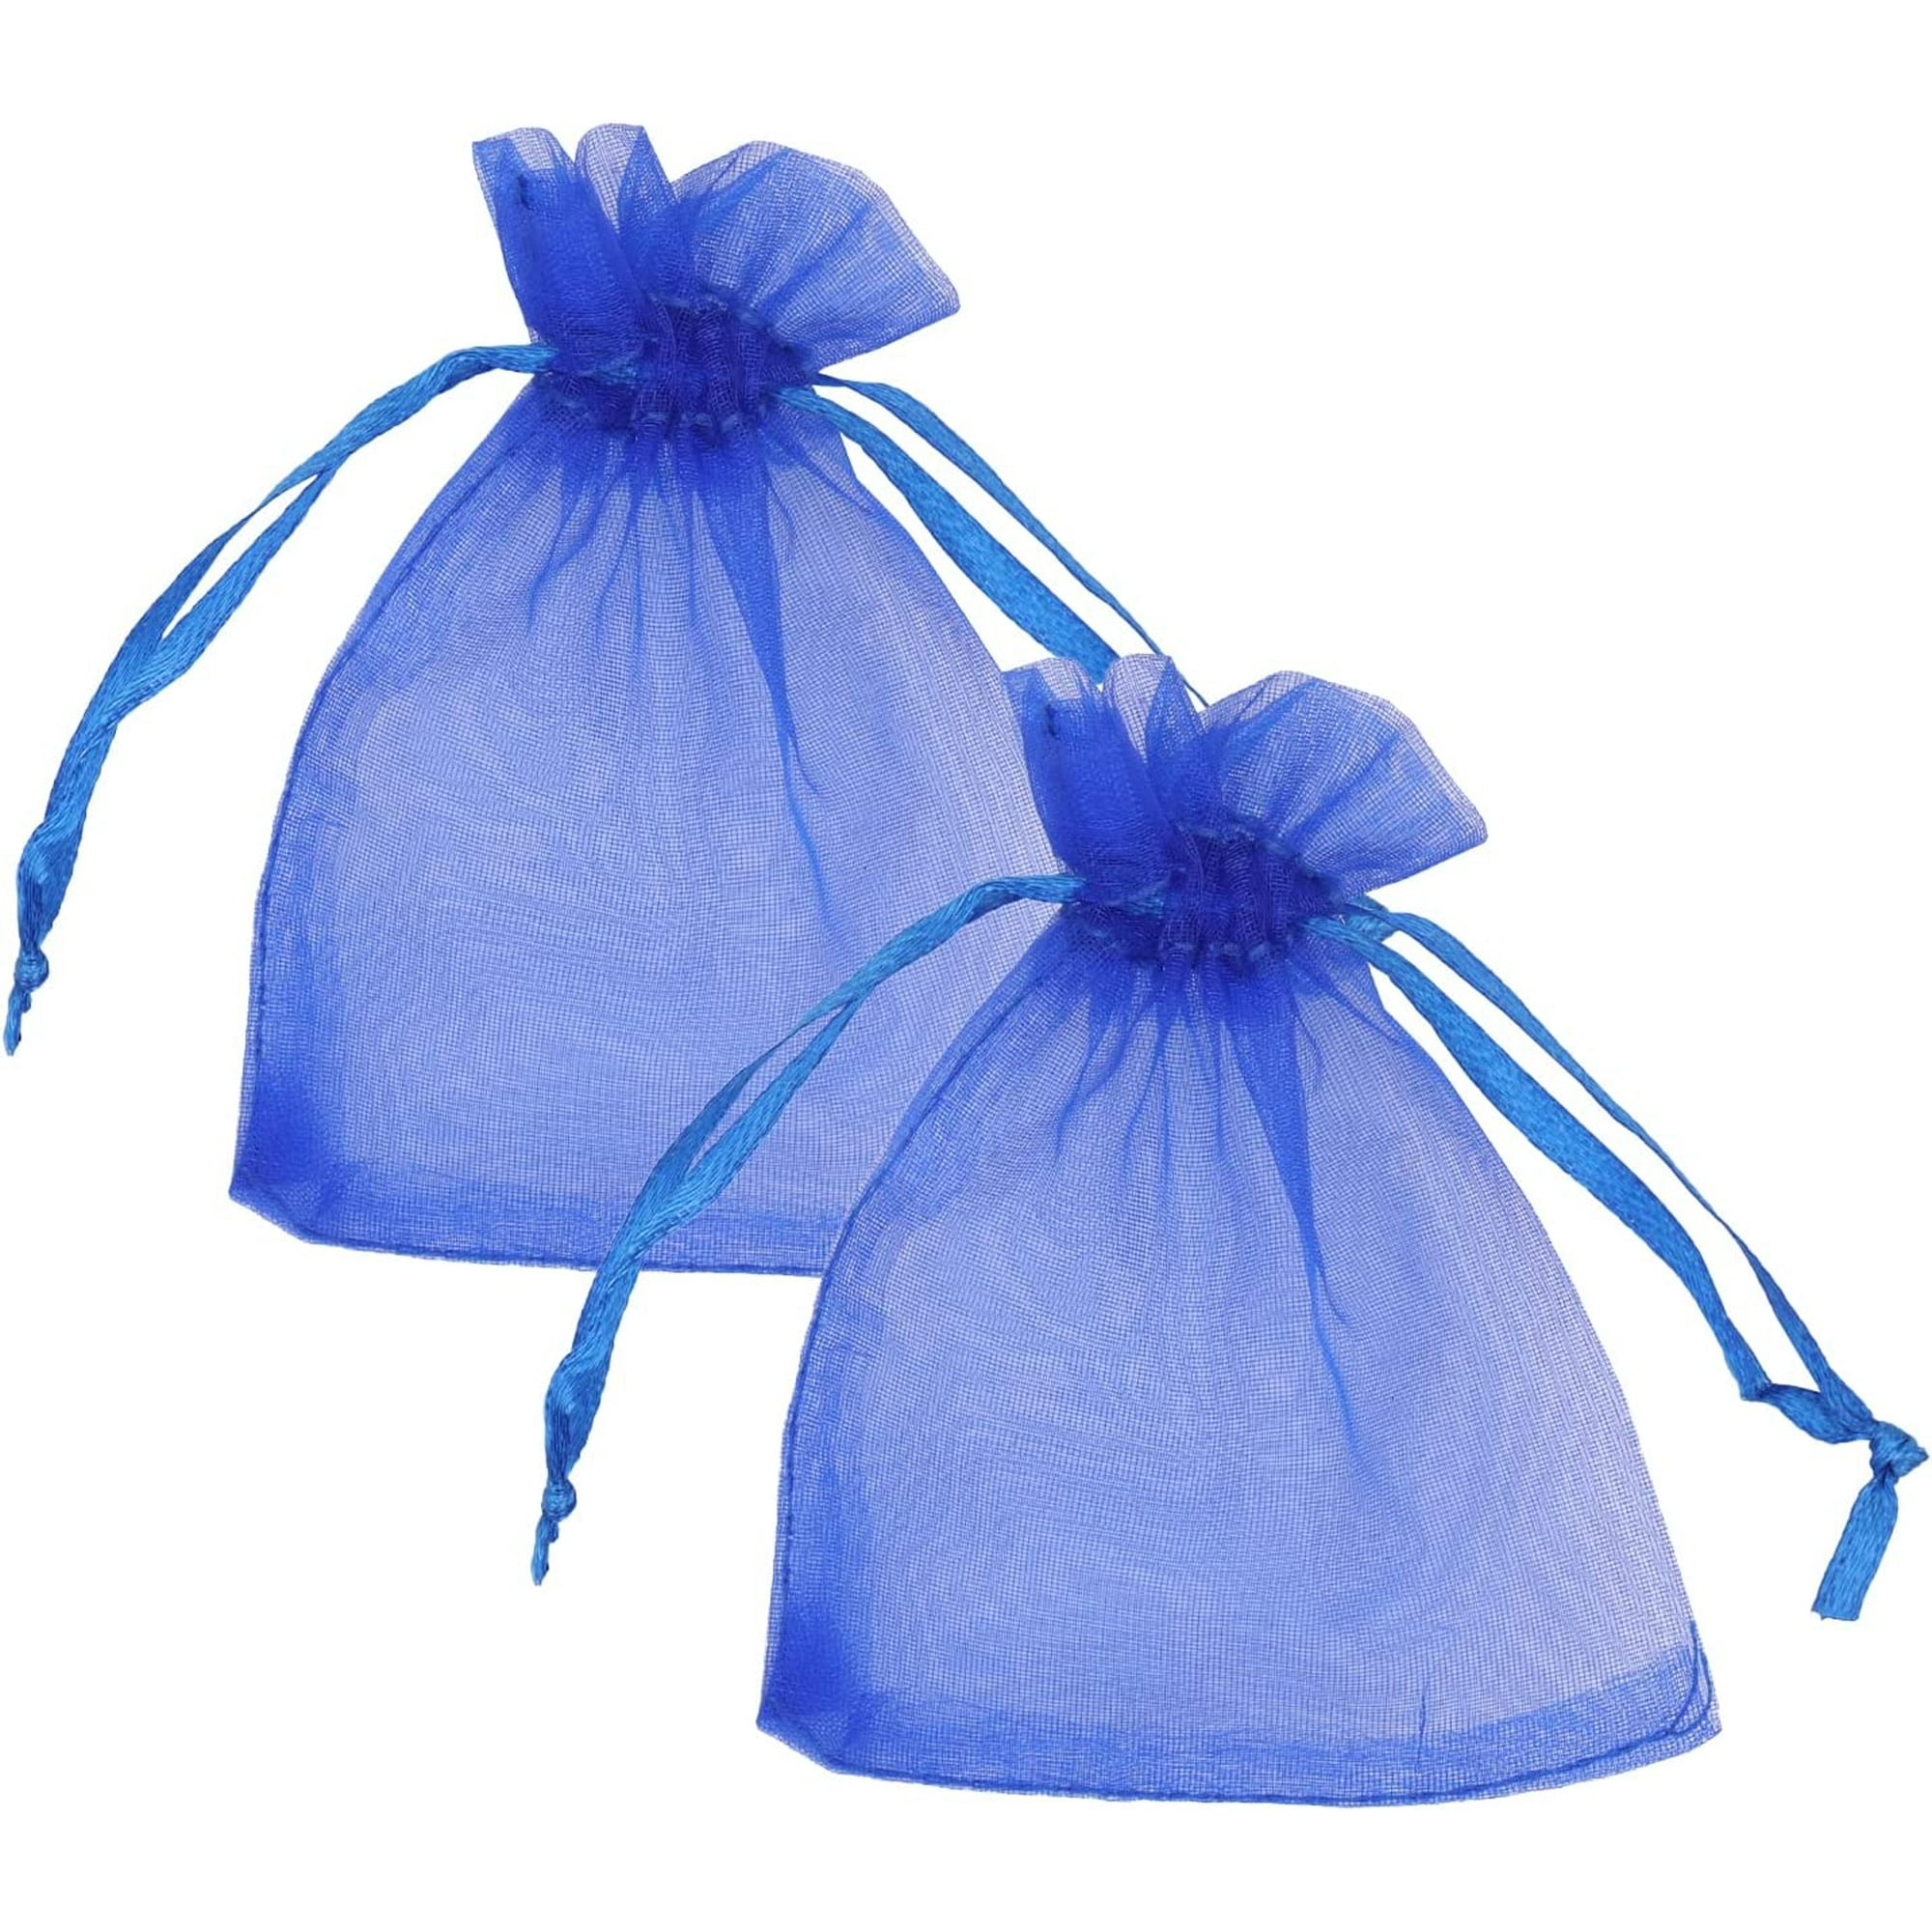 Trimming Shop Organza Bags Wedding Party Favor Gift Bags Sheer Bags 7cm x 9cm - Royal Blue - 100pcs, Size: 7x9cm, Black